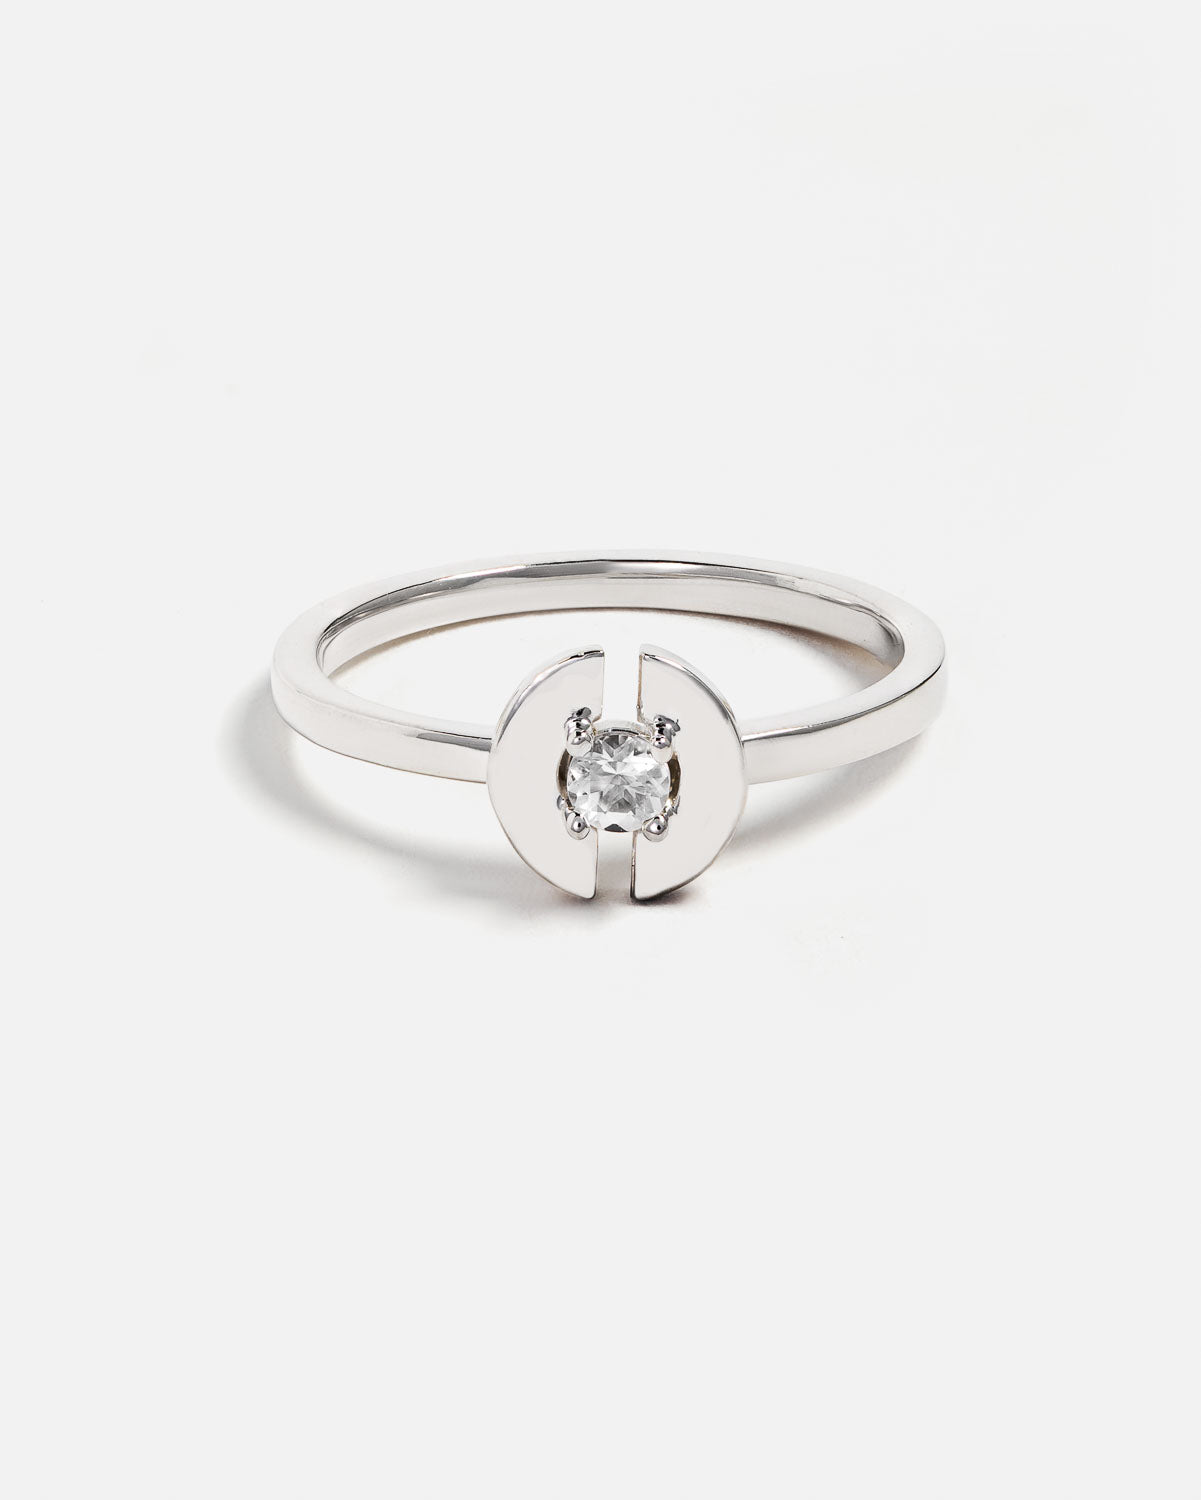 Stein Ring in Silver with White Quartz